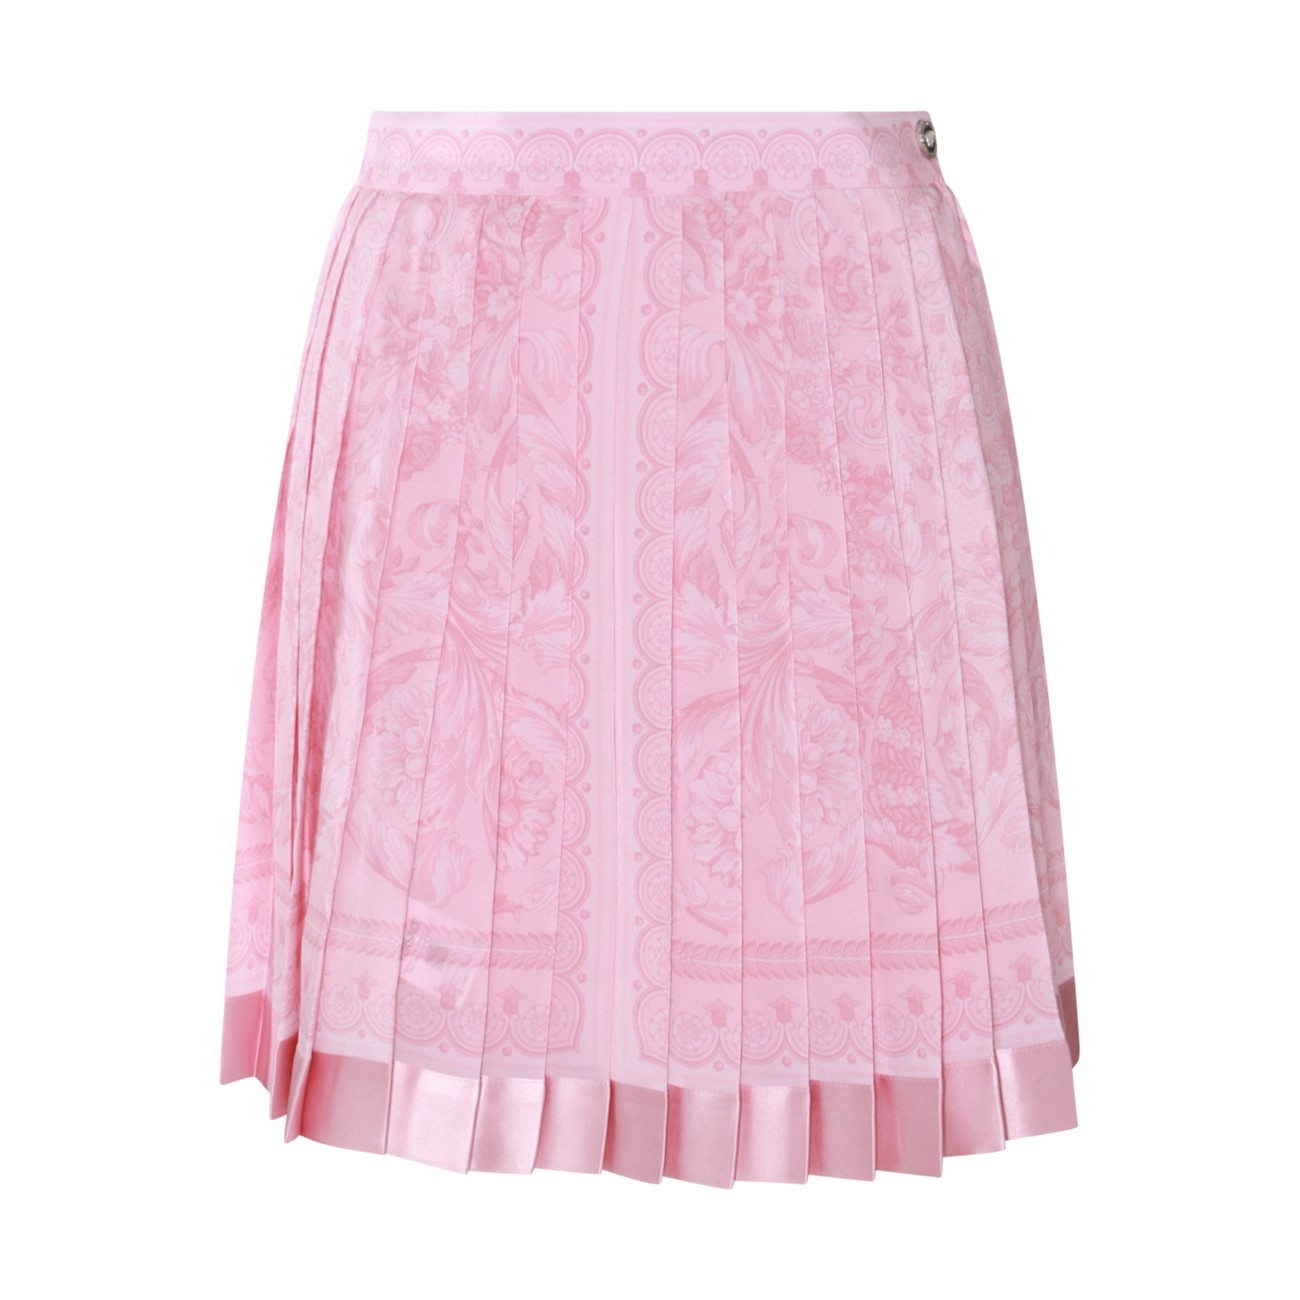 pink silk barocco skirt - 1